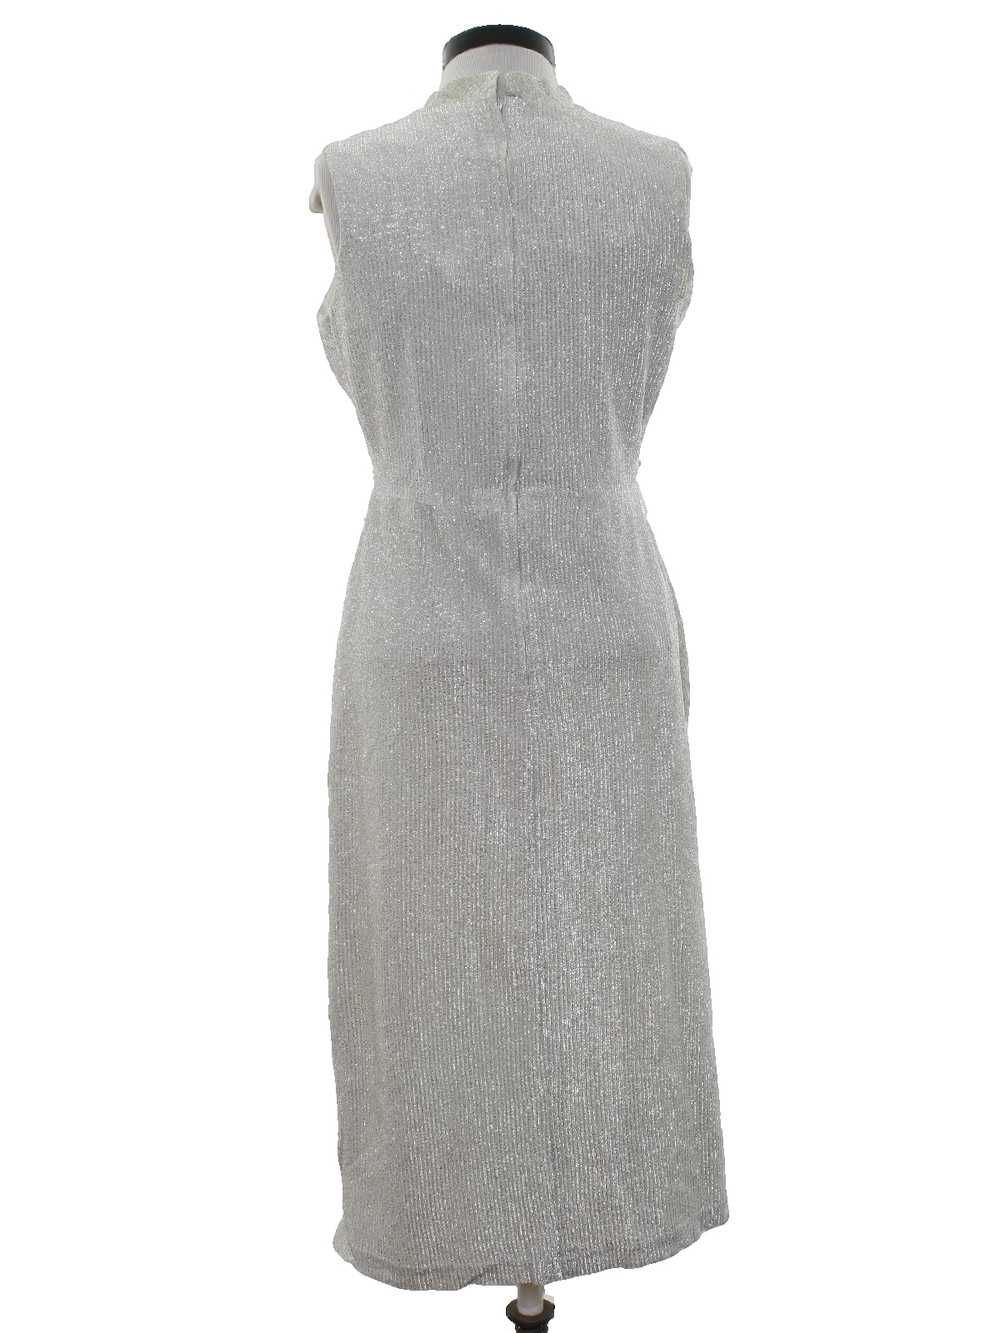 1960's Mod Maxi Cocktail Dress - image 3